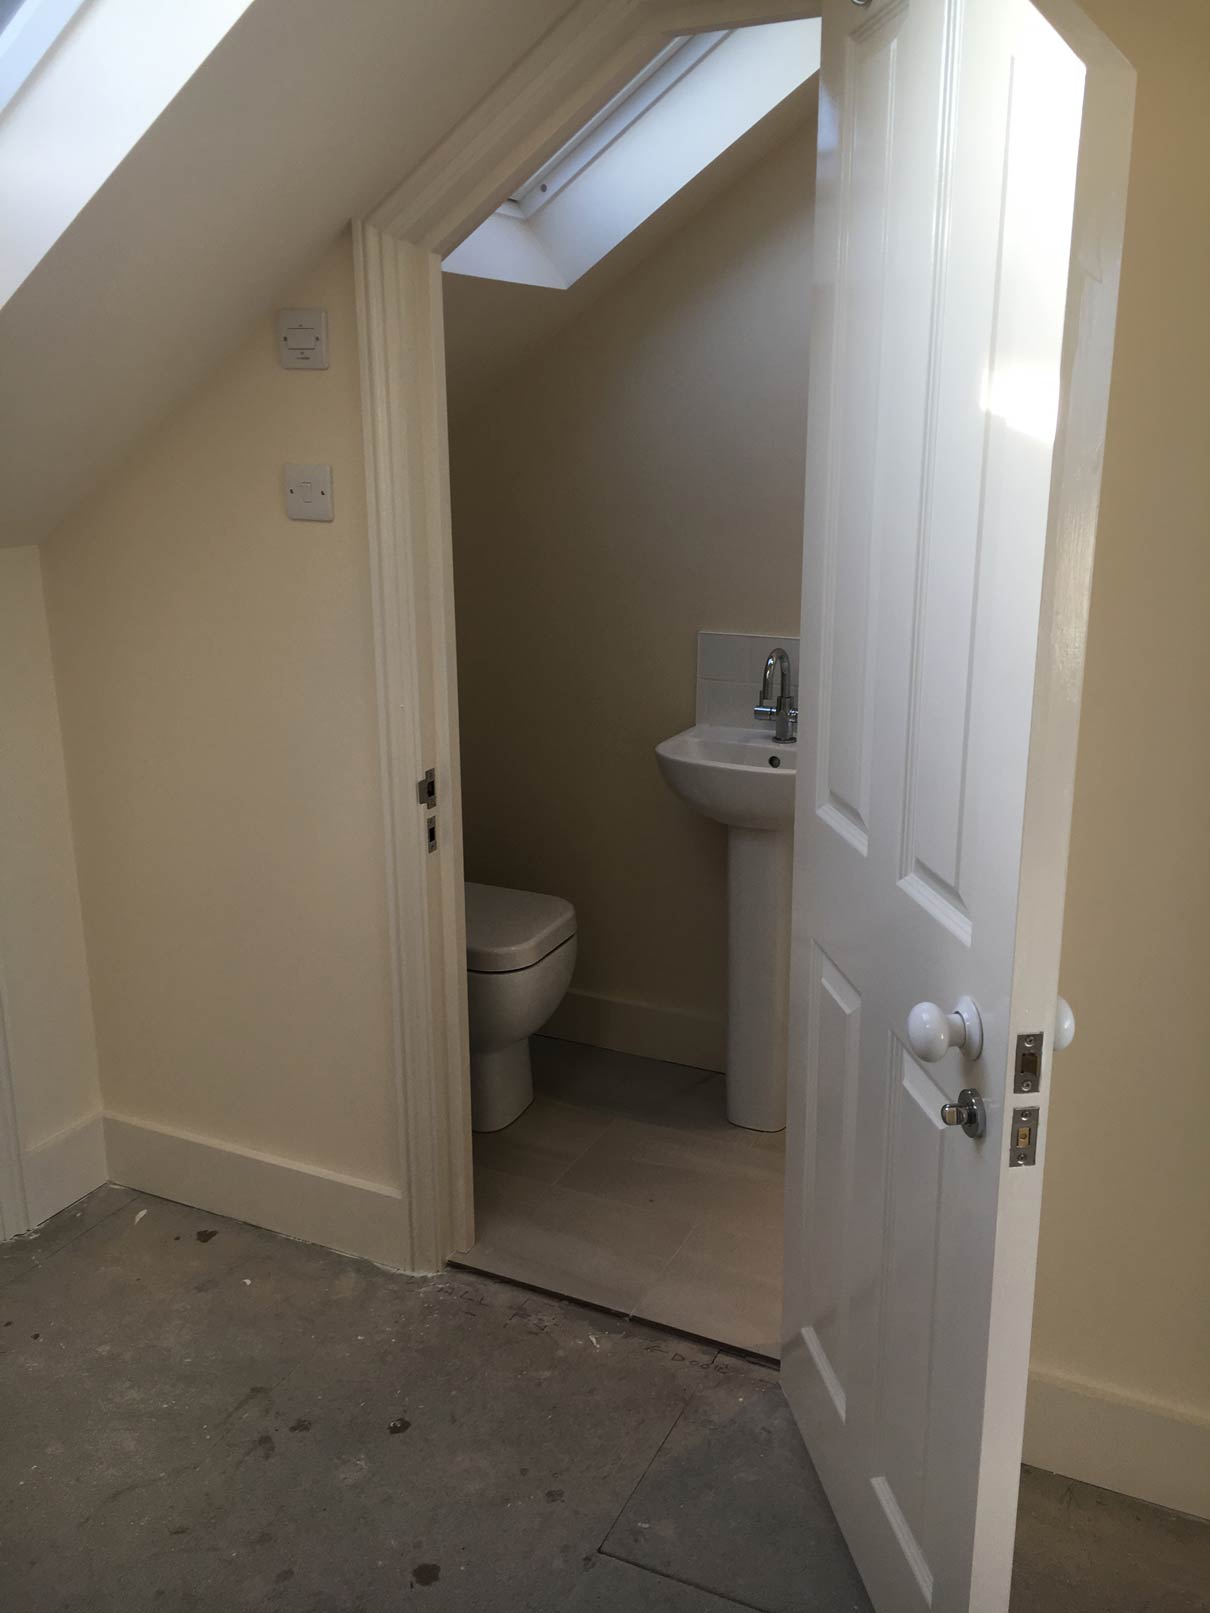 Bathroom of Loft Conversion - Expert Loft Conversions in Portsmouth